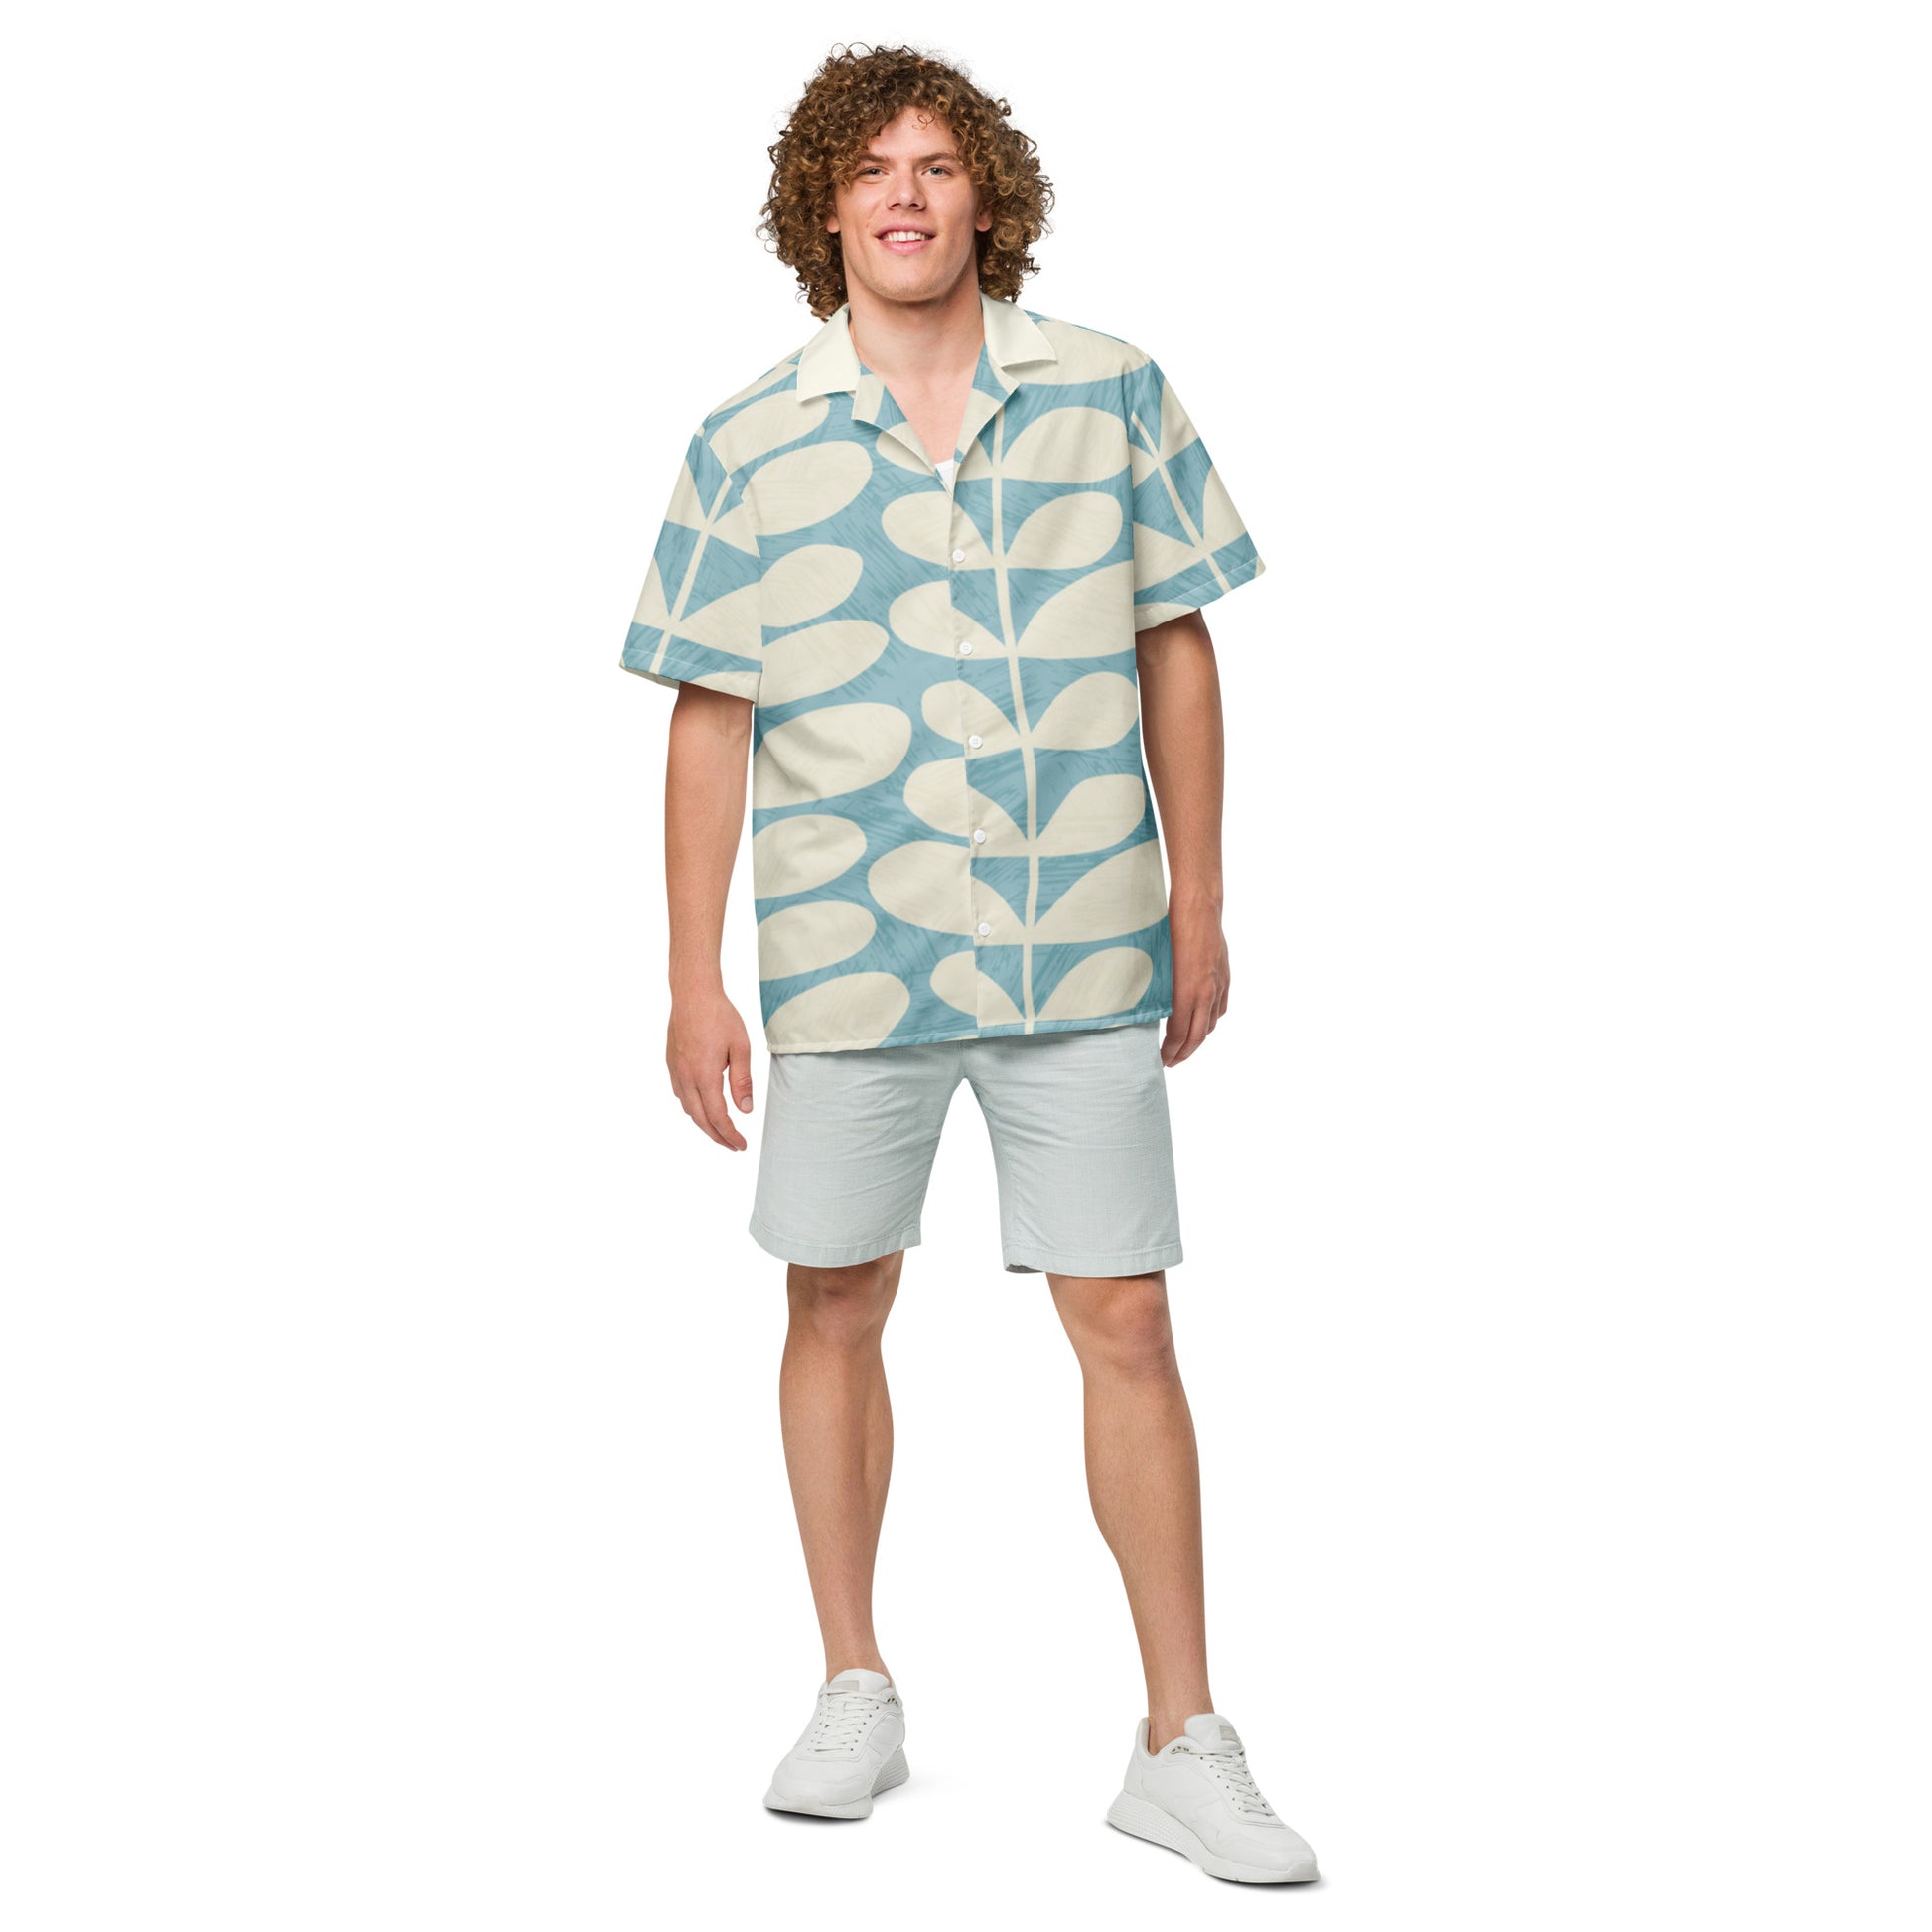 Humble Sportswear™, men's abstract blue green collared beach button shirt